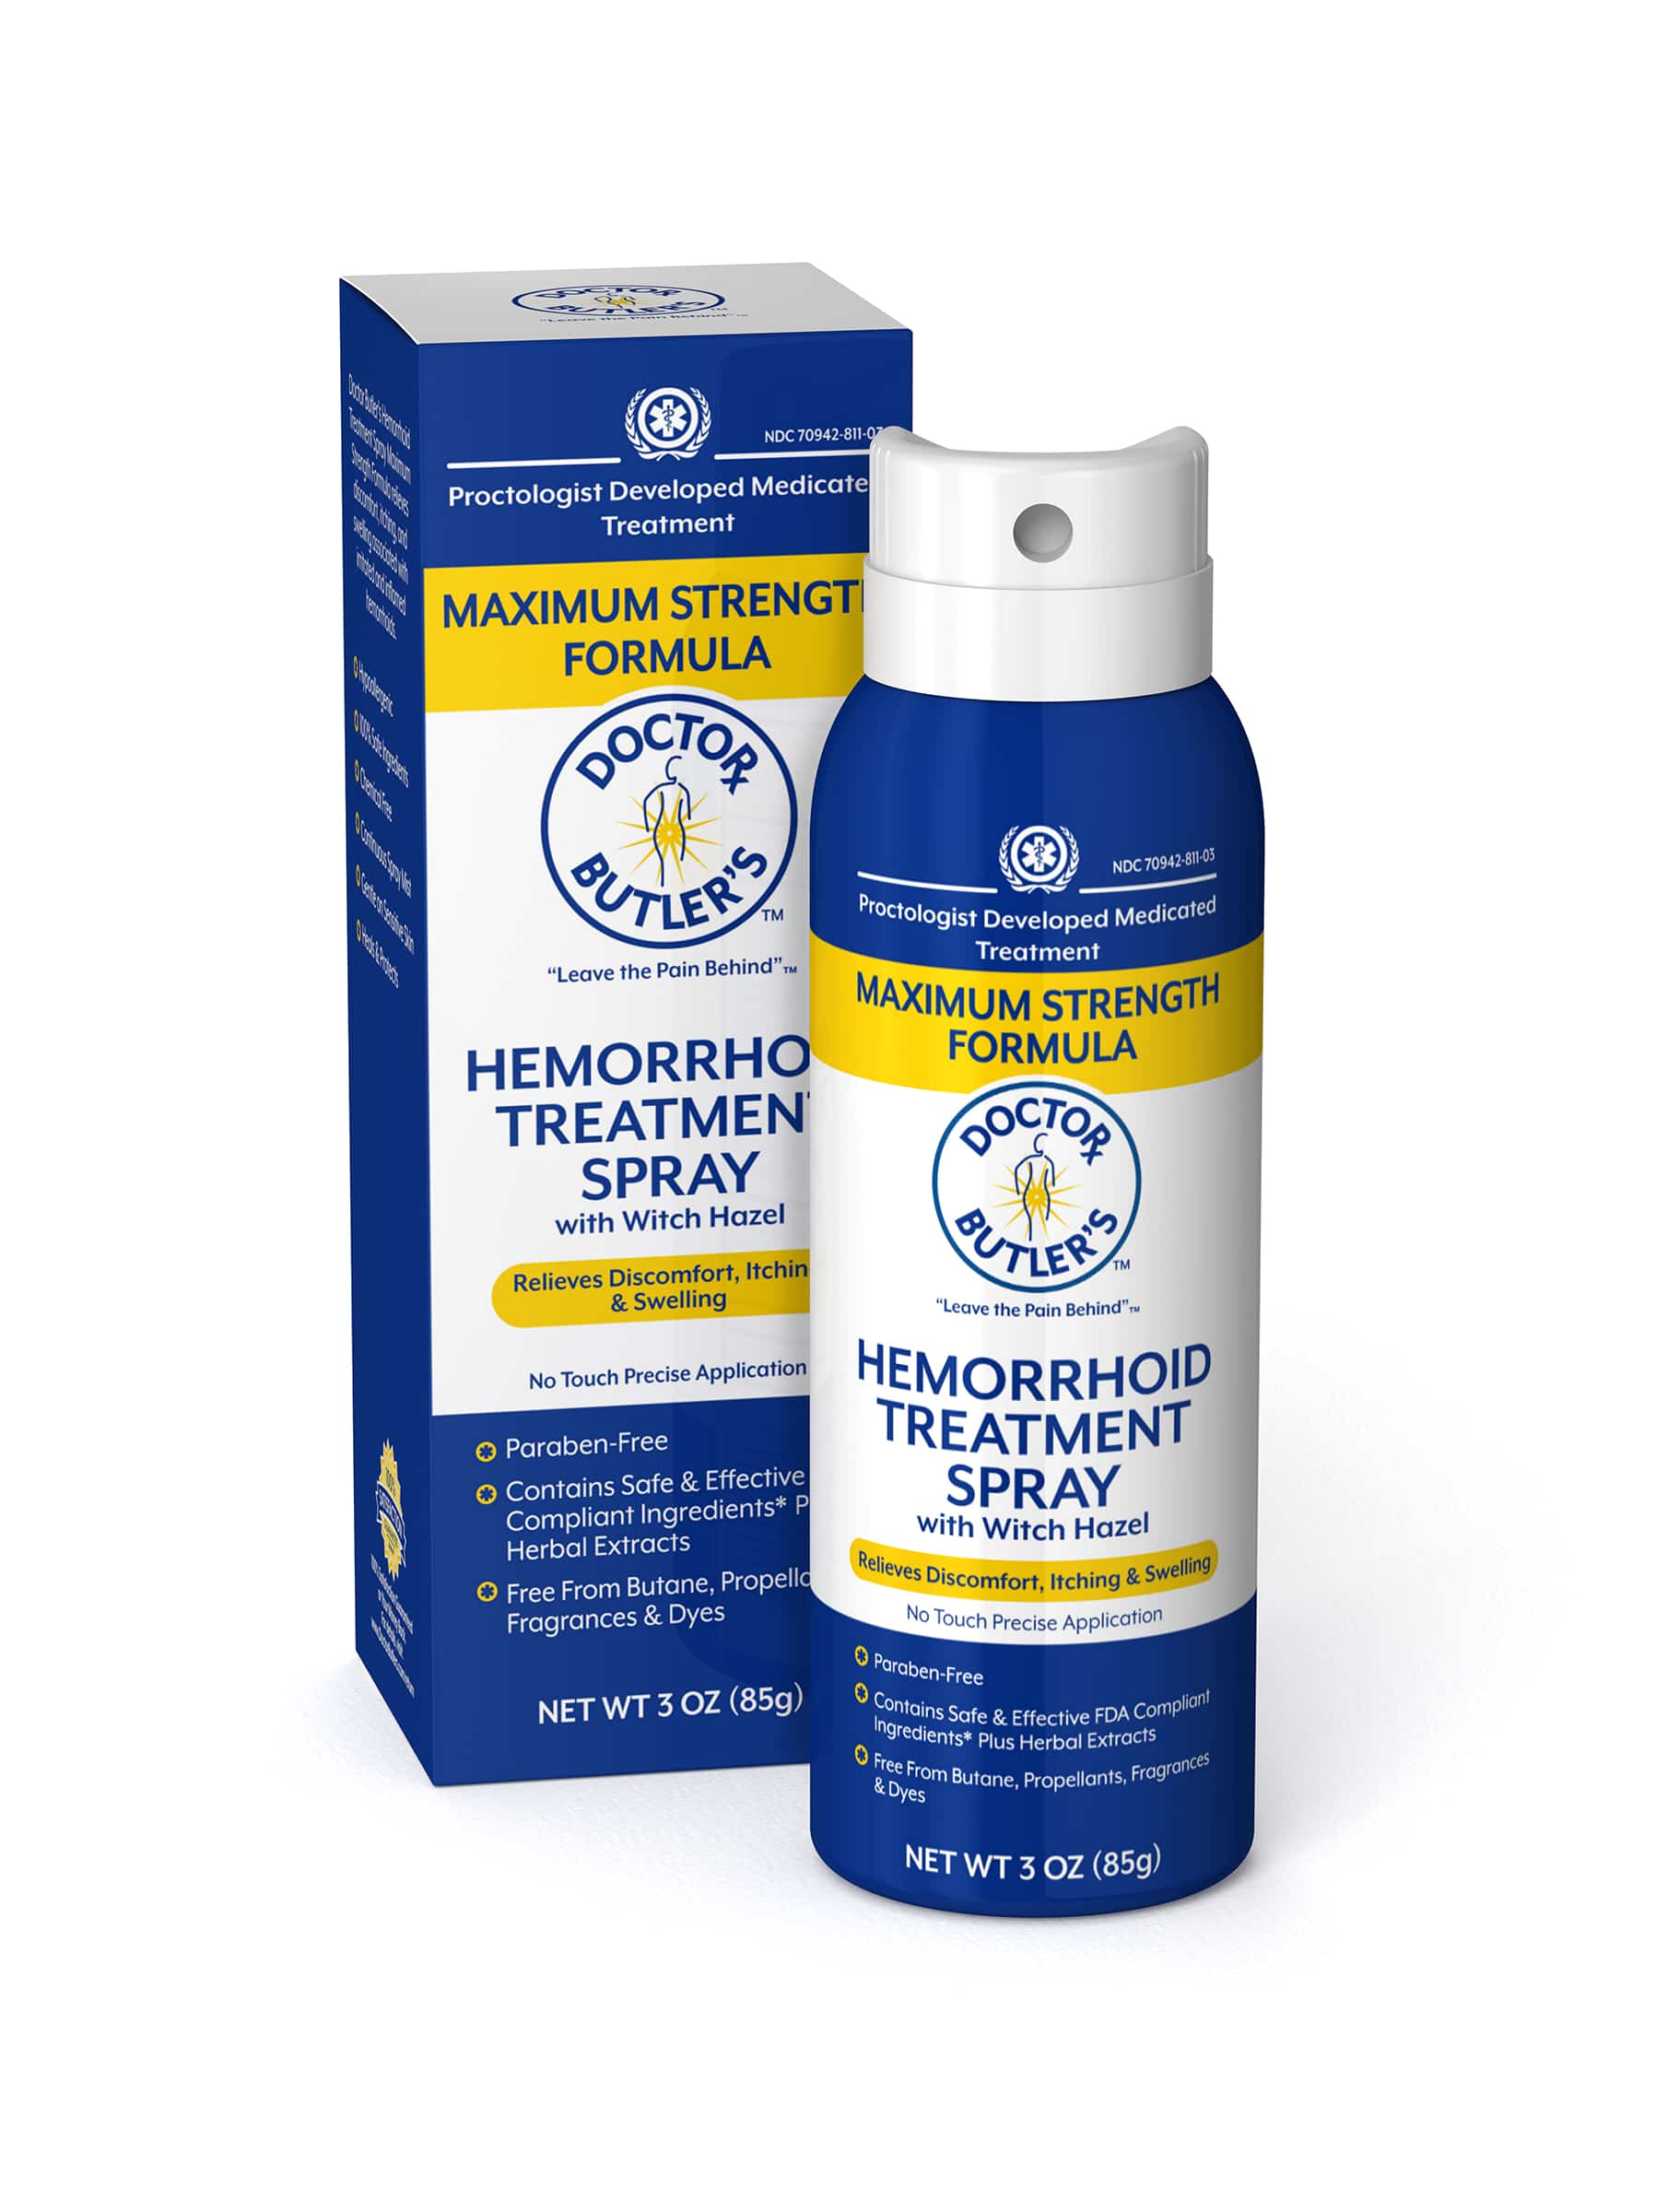 Hemorrhoid Spray